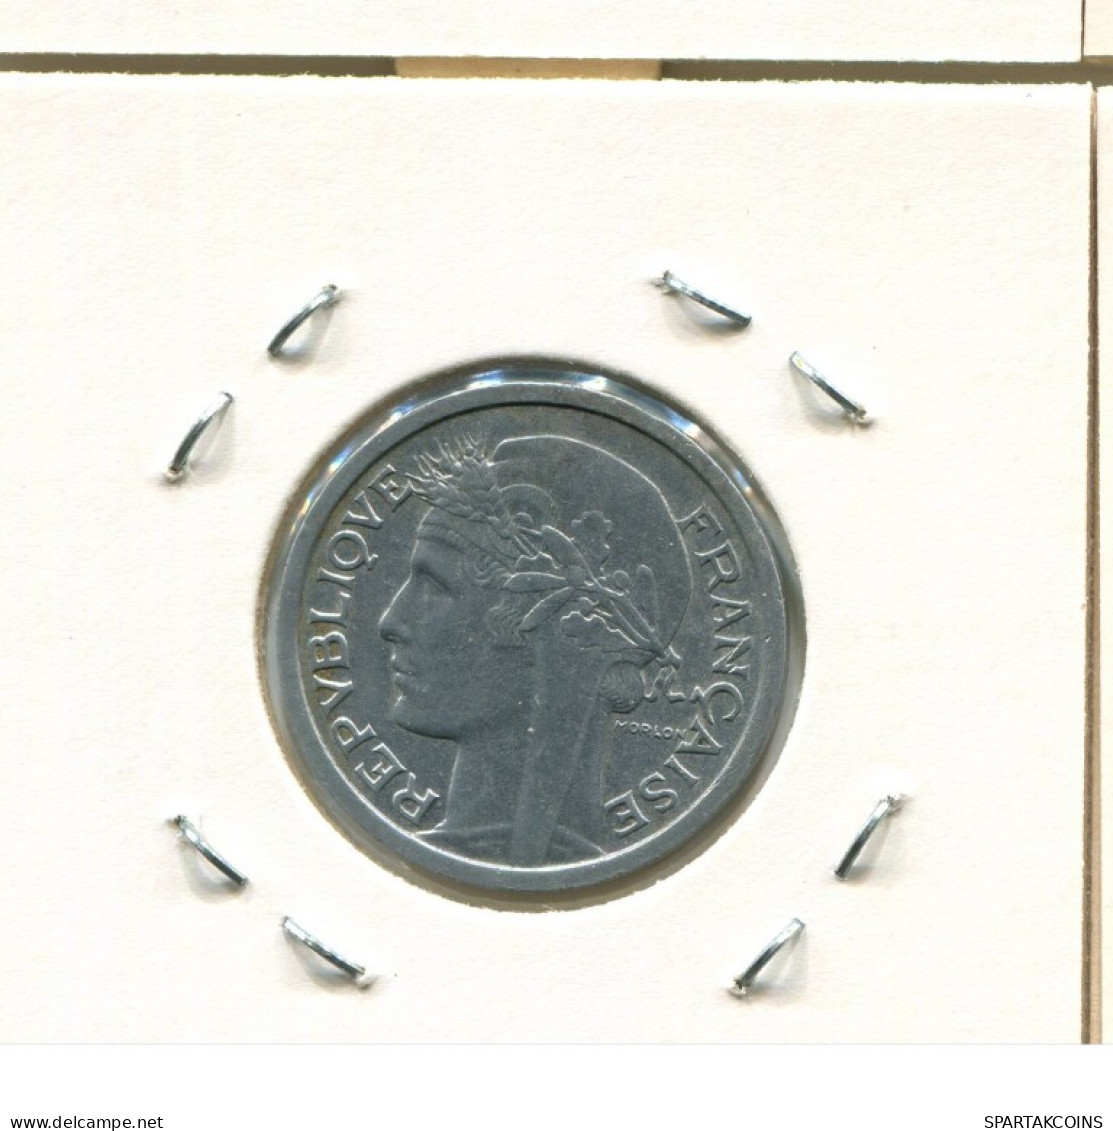 1 FRANC 1950 FRANCE Coin French Coin #AM299.U.A - 1 Franc